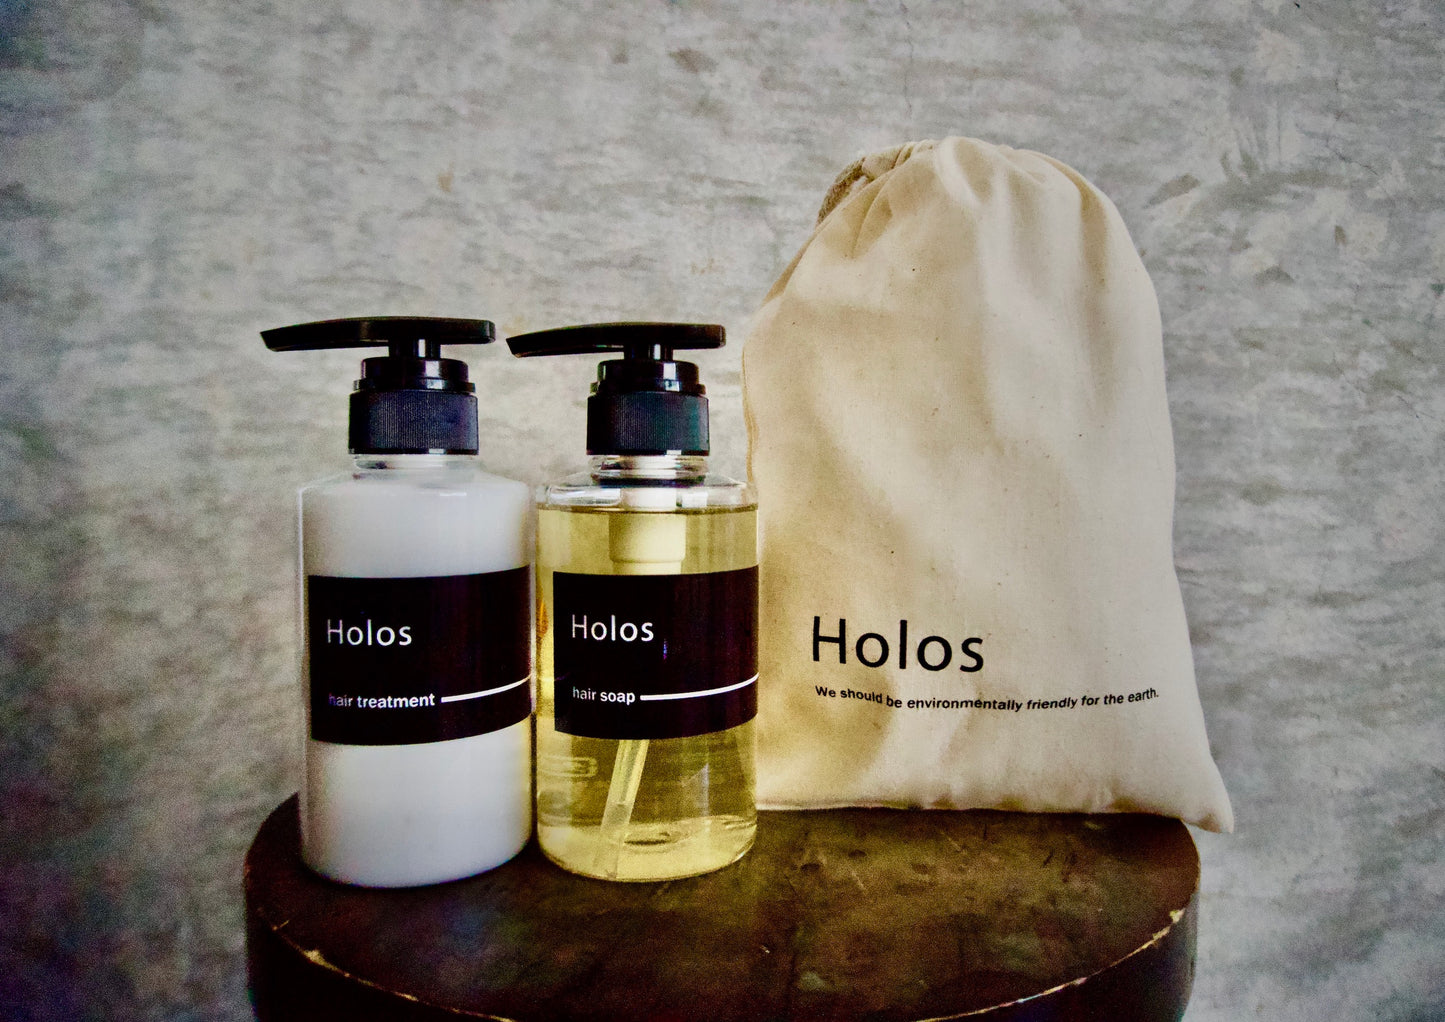 Holos Non-silicone Shampoo & Treatment With Purse